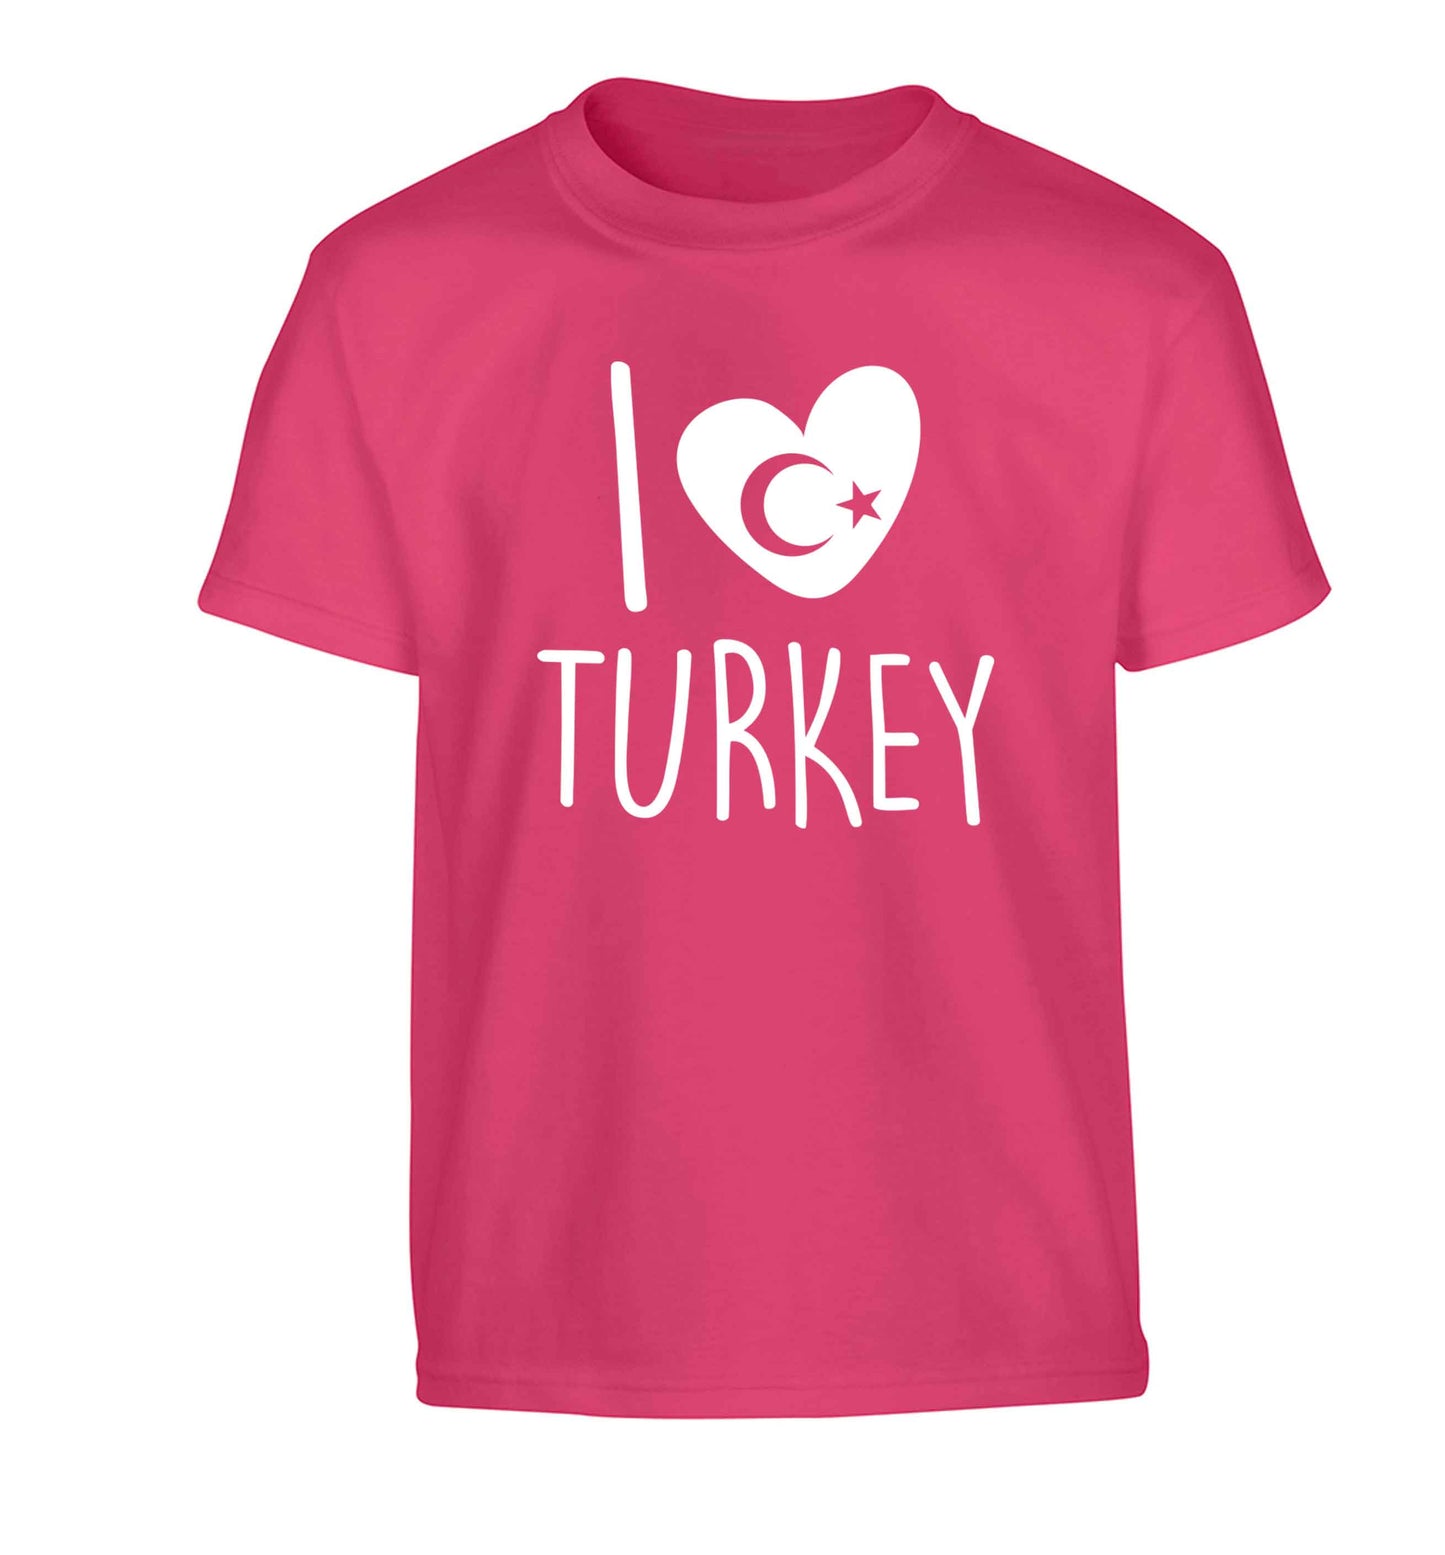 I love Turkey Children's pink Tshirt 12-13 Years